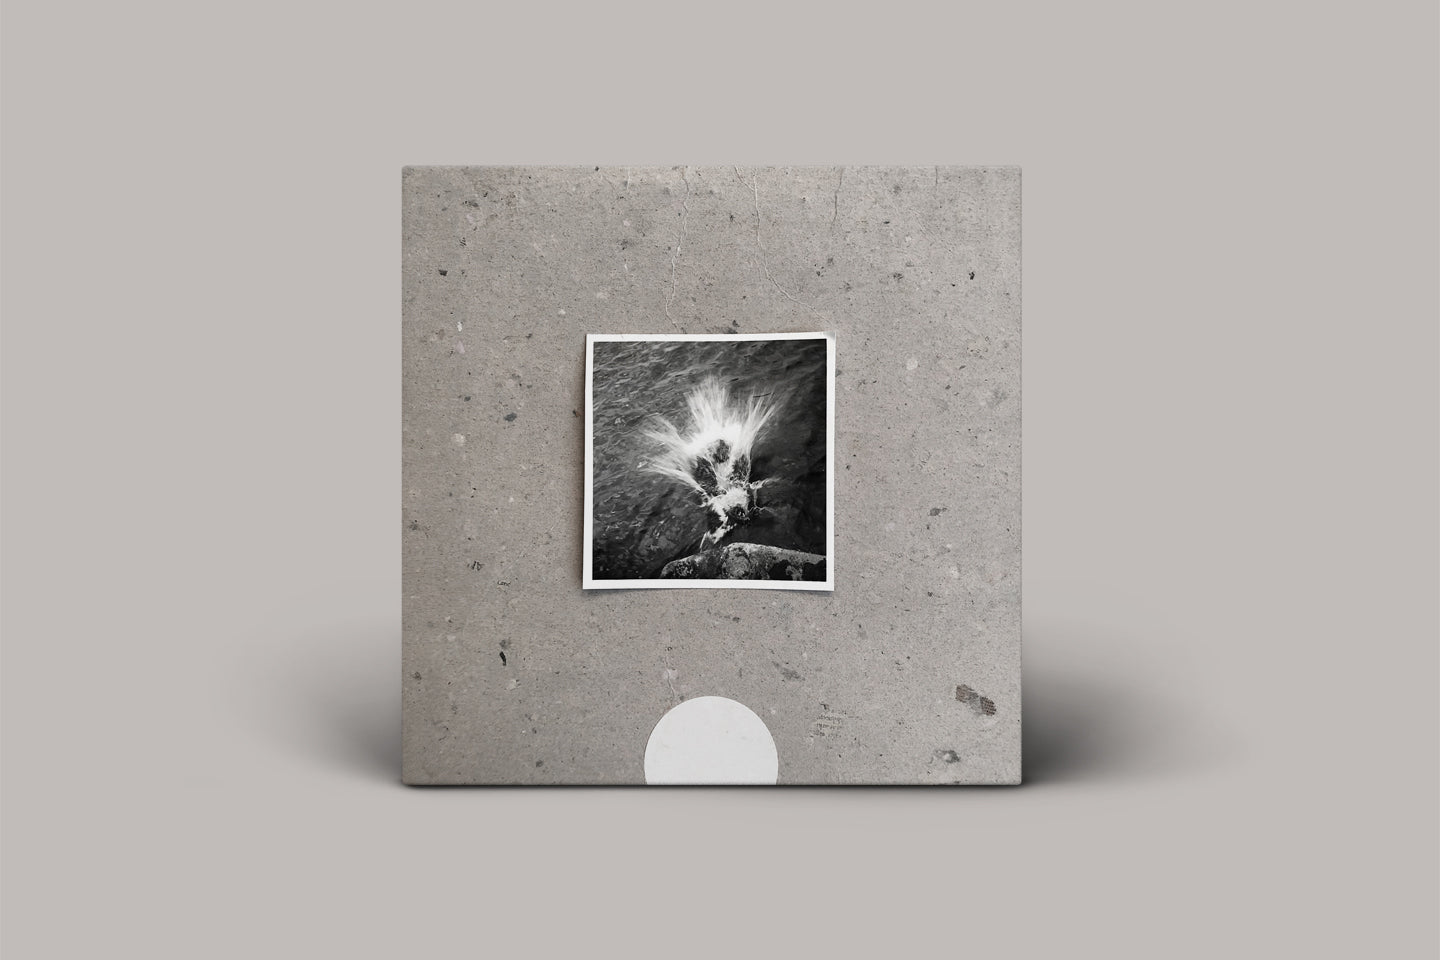 Arcade Sound - Nils Frahm - Empty - LP / CD front cover